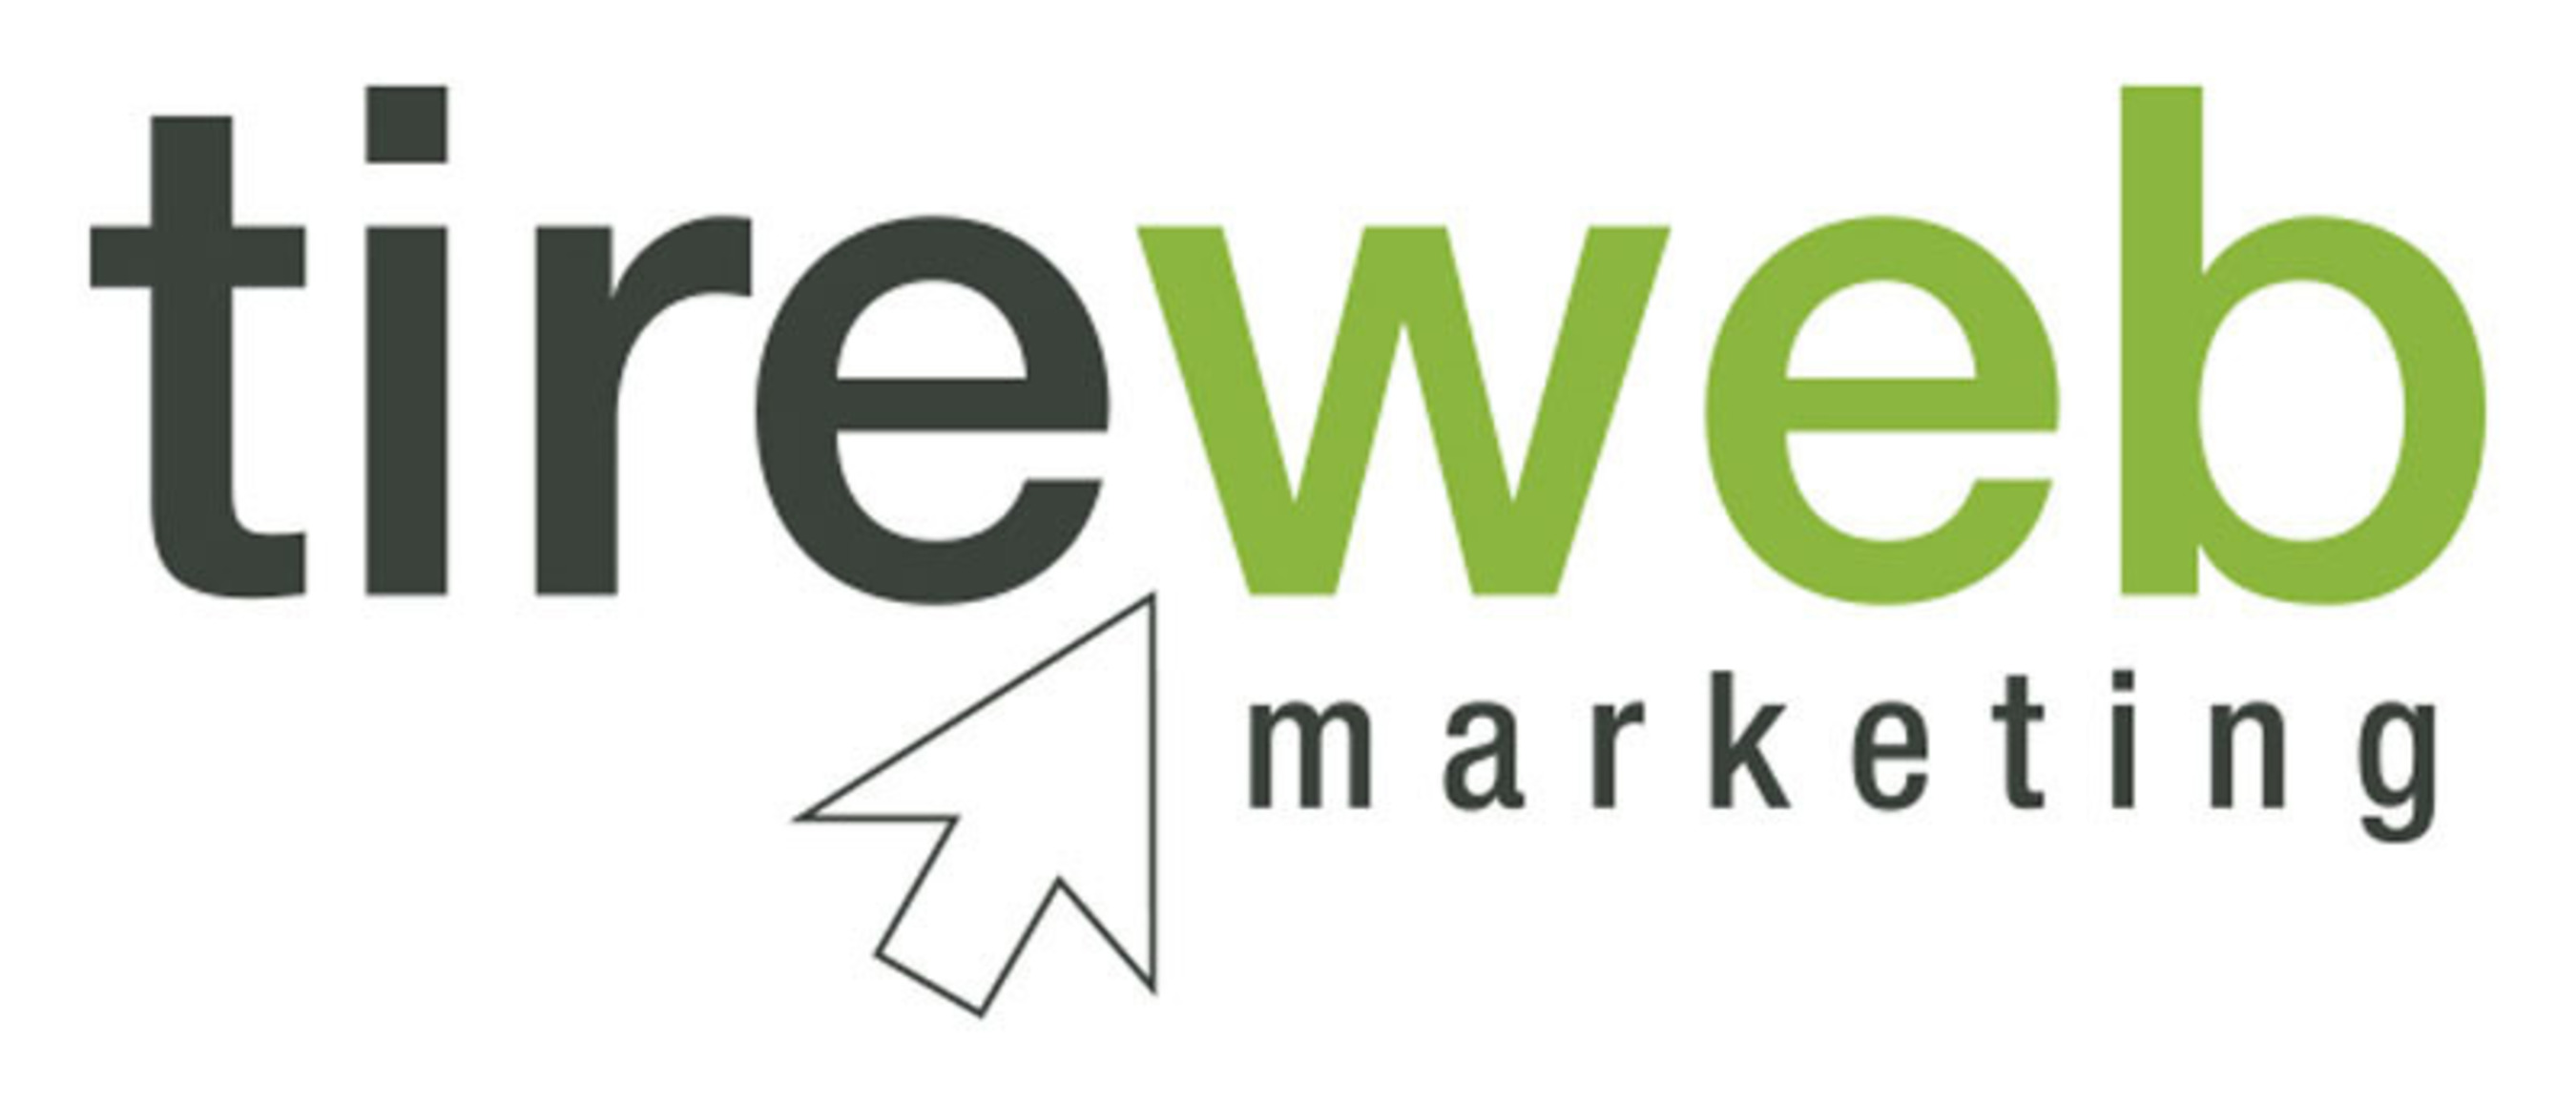 Tireweb Marketing.(PRNewsFoto/Tireweb Marketing) (PRNewsFoto/TIREWEB MARKETING)